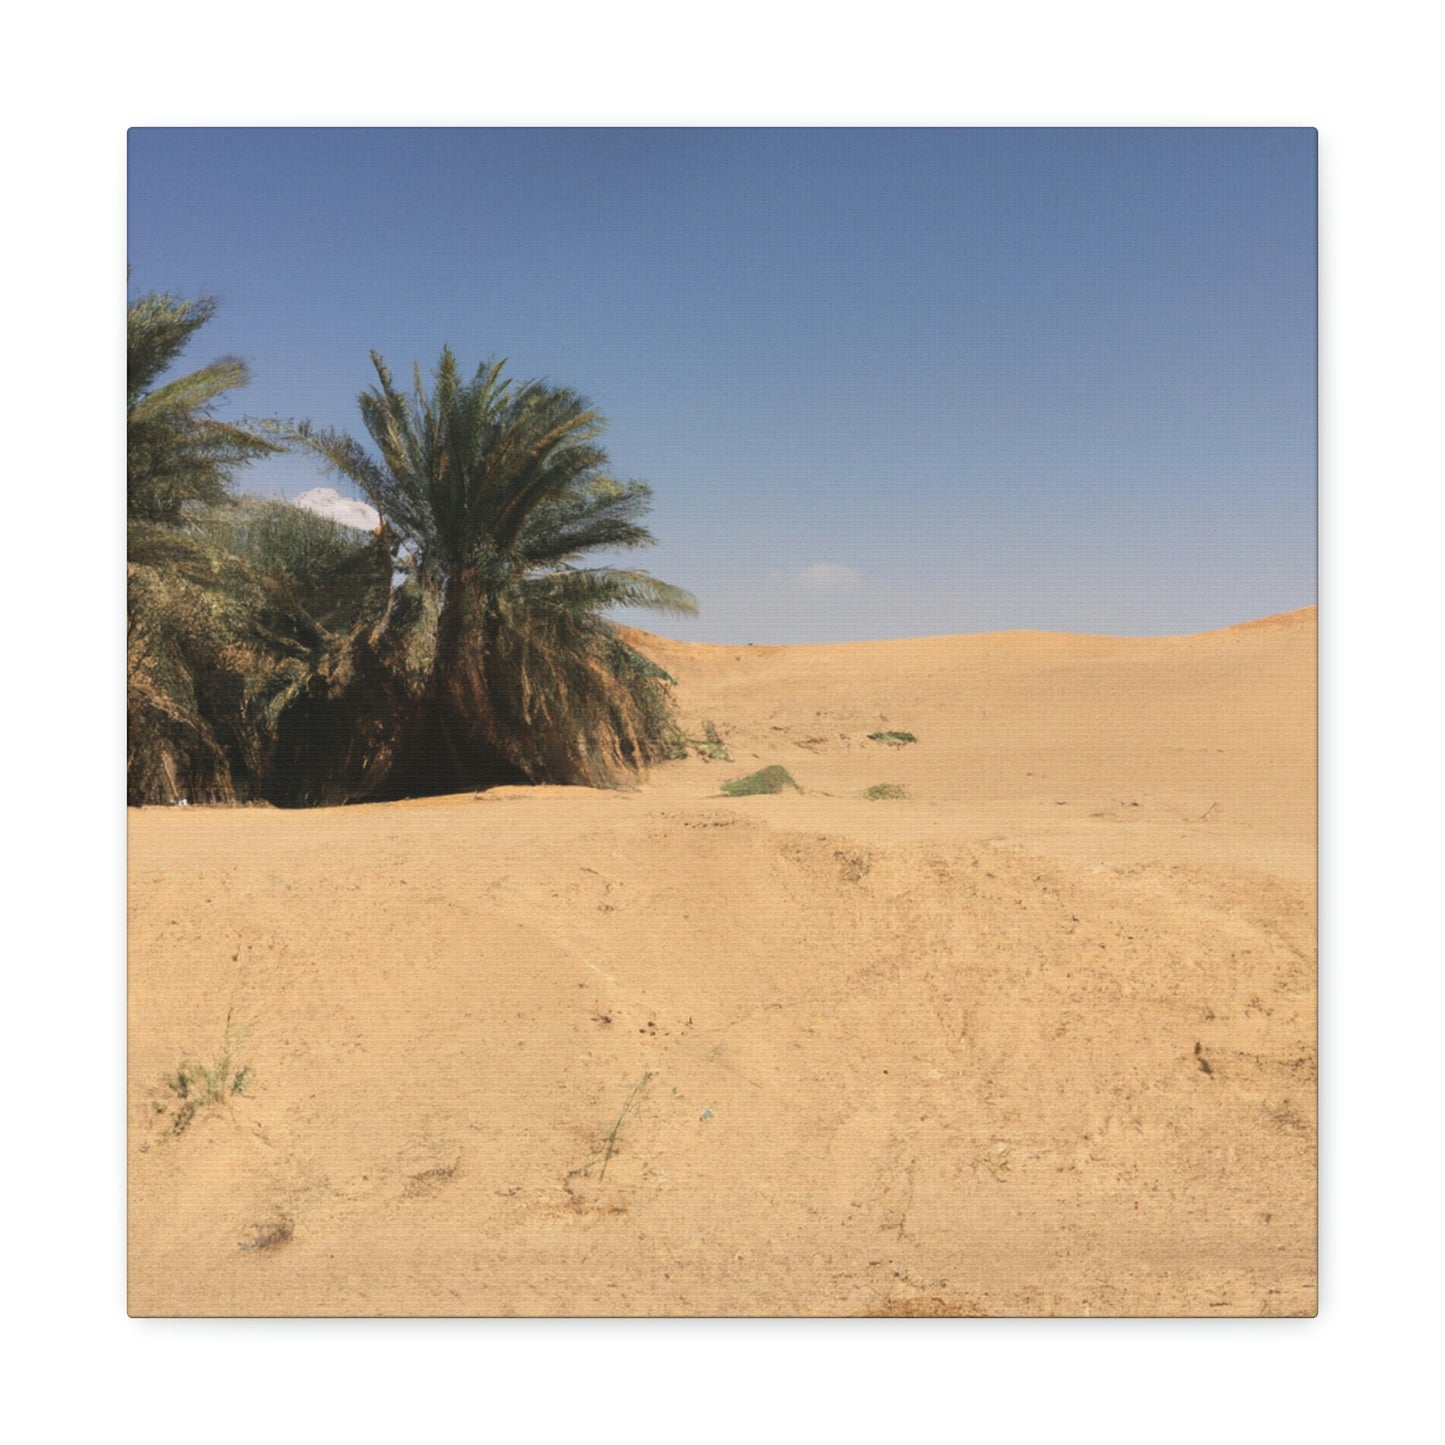 "A Desert Oasis" - The Alien Canva